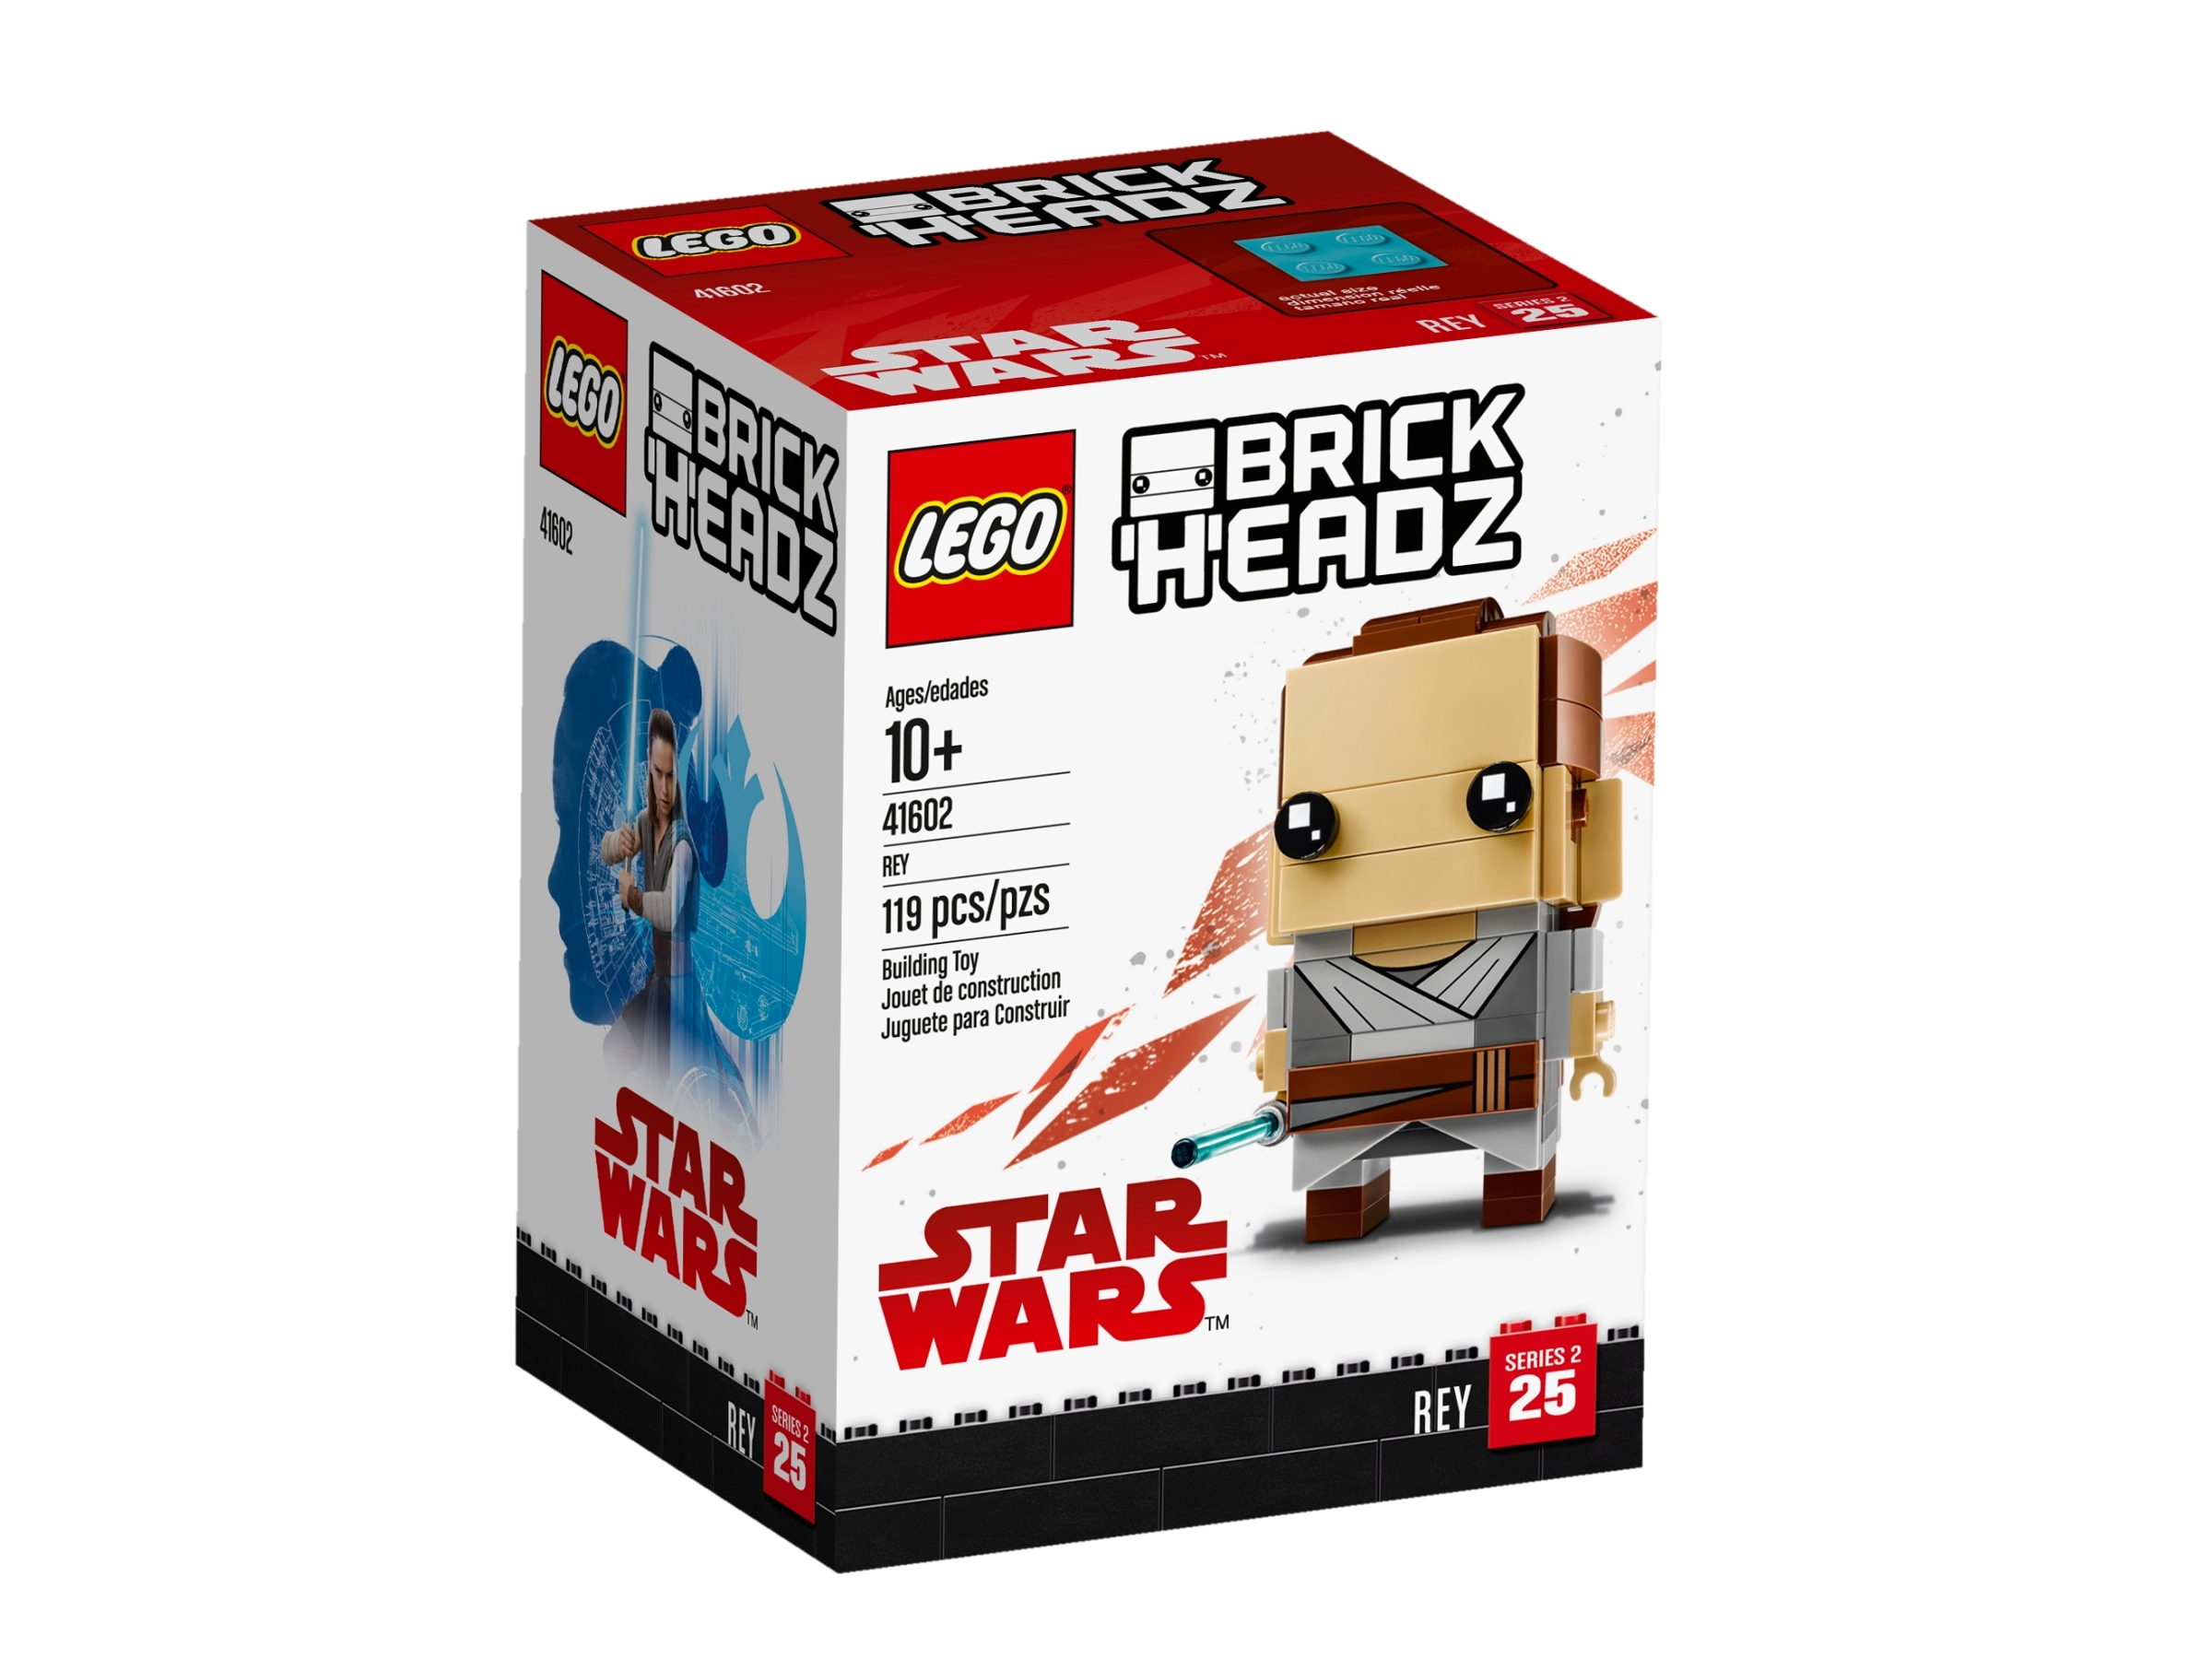 LEGO Brick Headz 41602 Star War character featuring Rey N2/18 